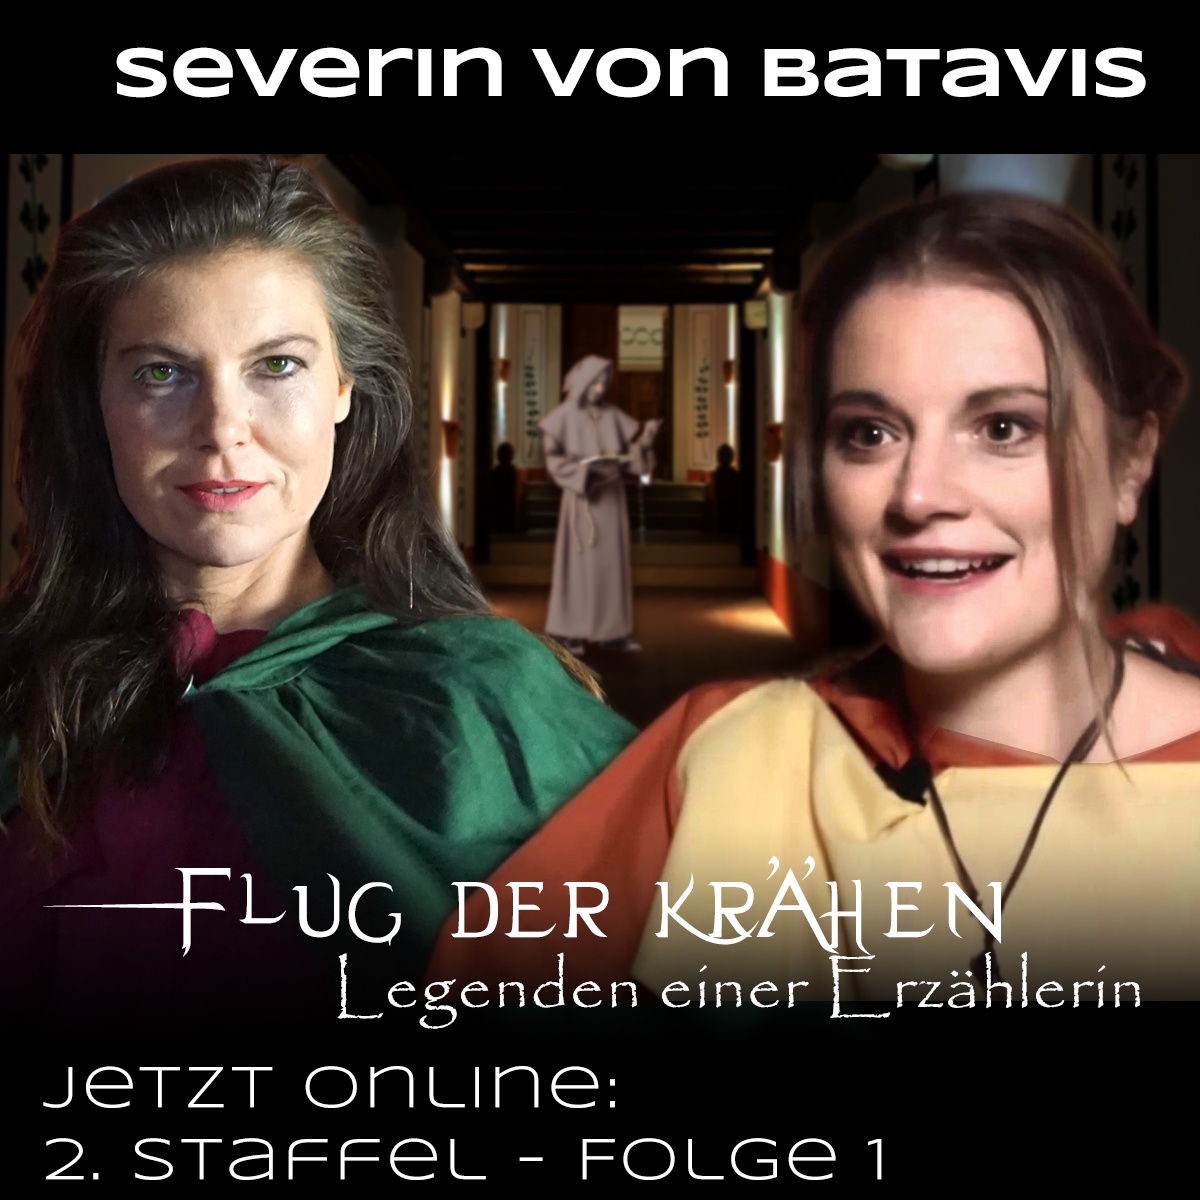 Severin von Batavis (Season 2 Folge 1)